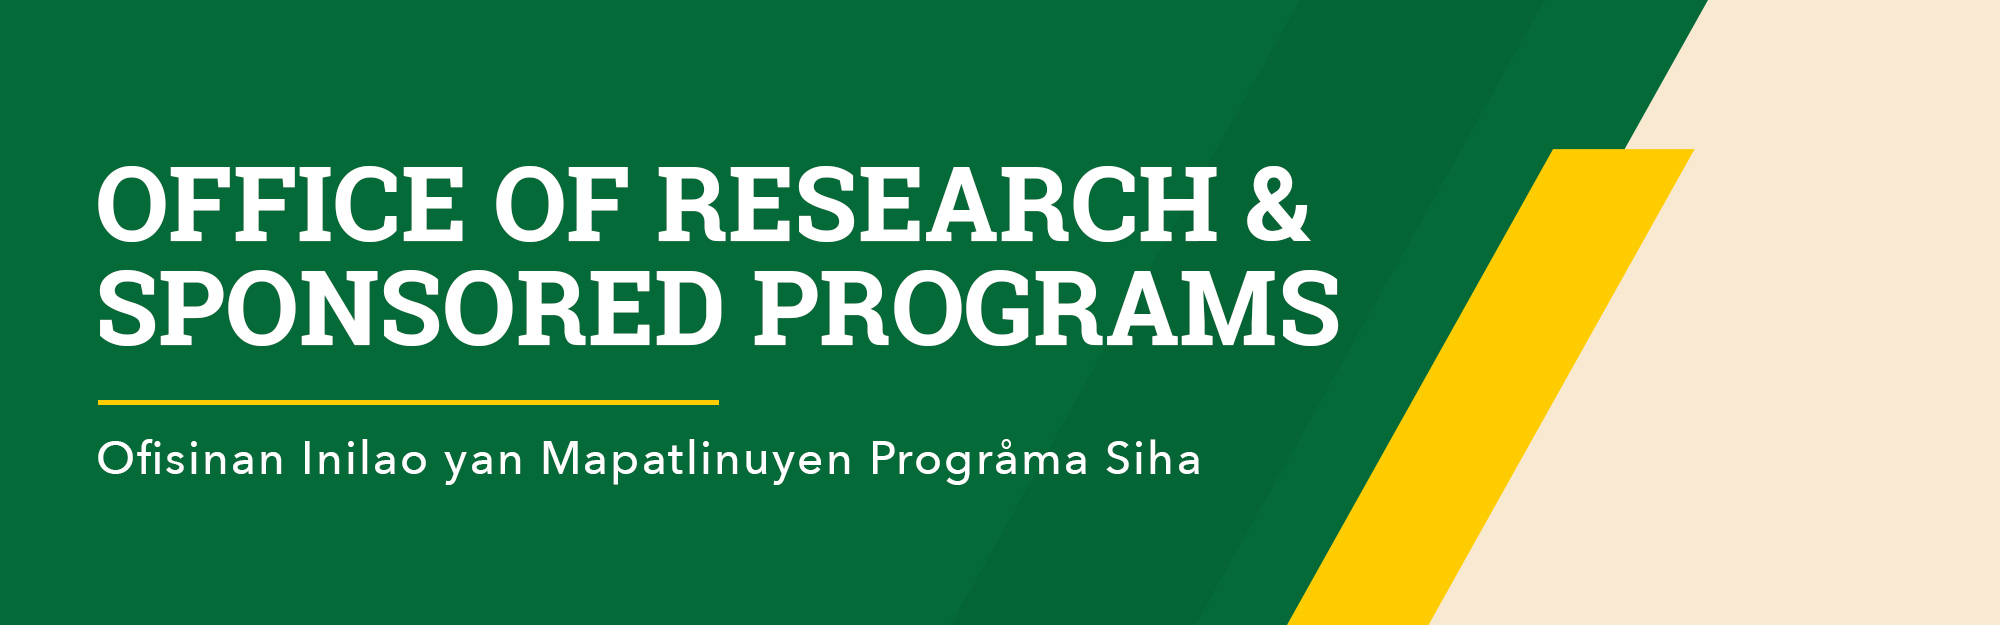 Office of Research & Sponsored Programs. Translation in CHamoru: "Ofisinan Inilao yan Mapatlinuyen Progråma Siha"